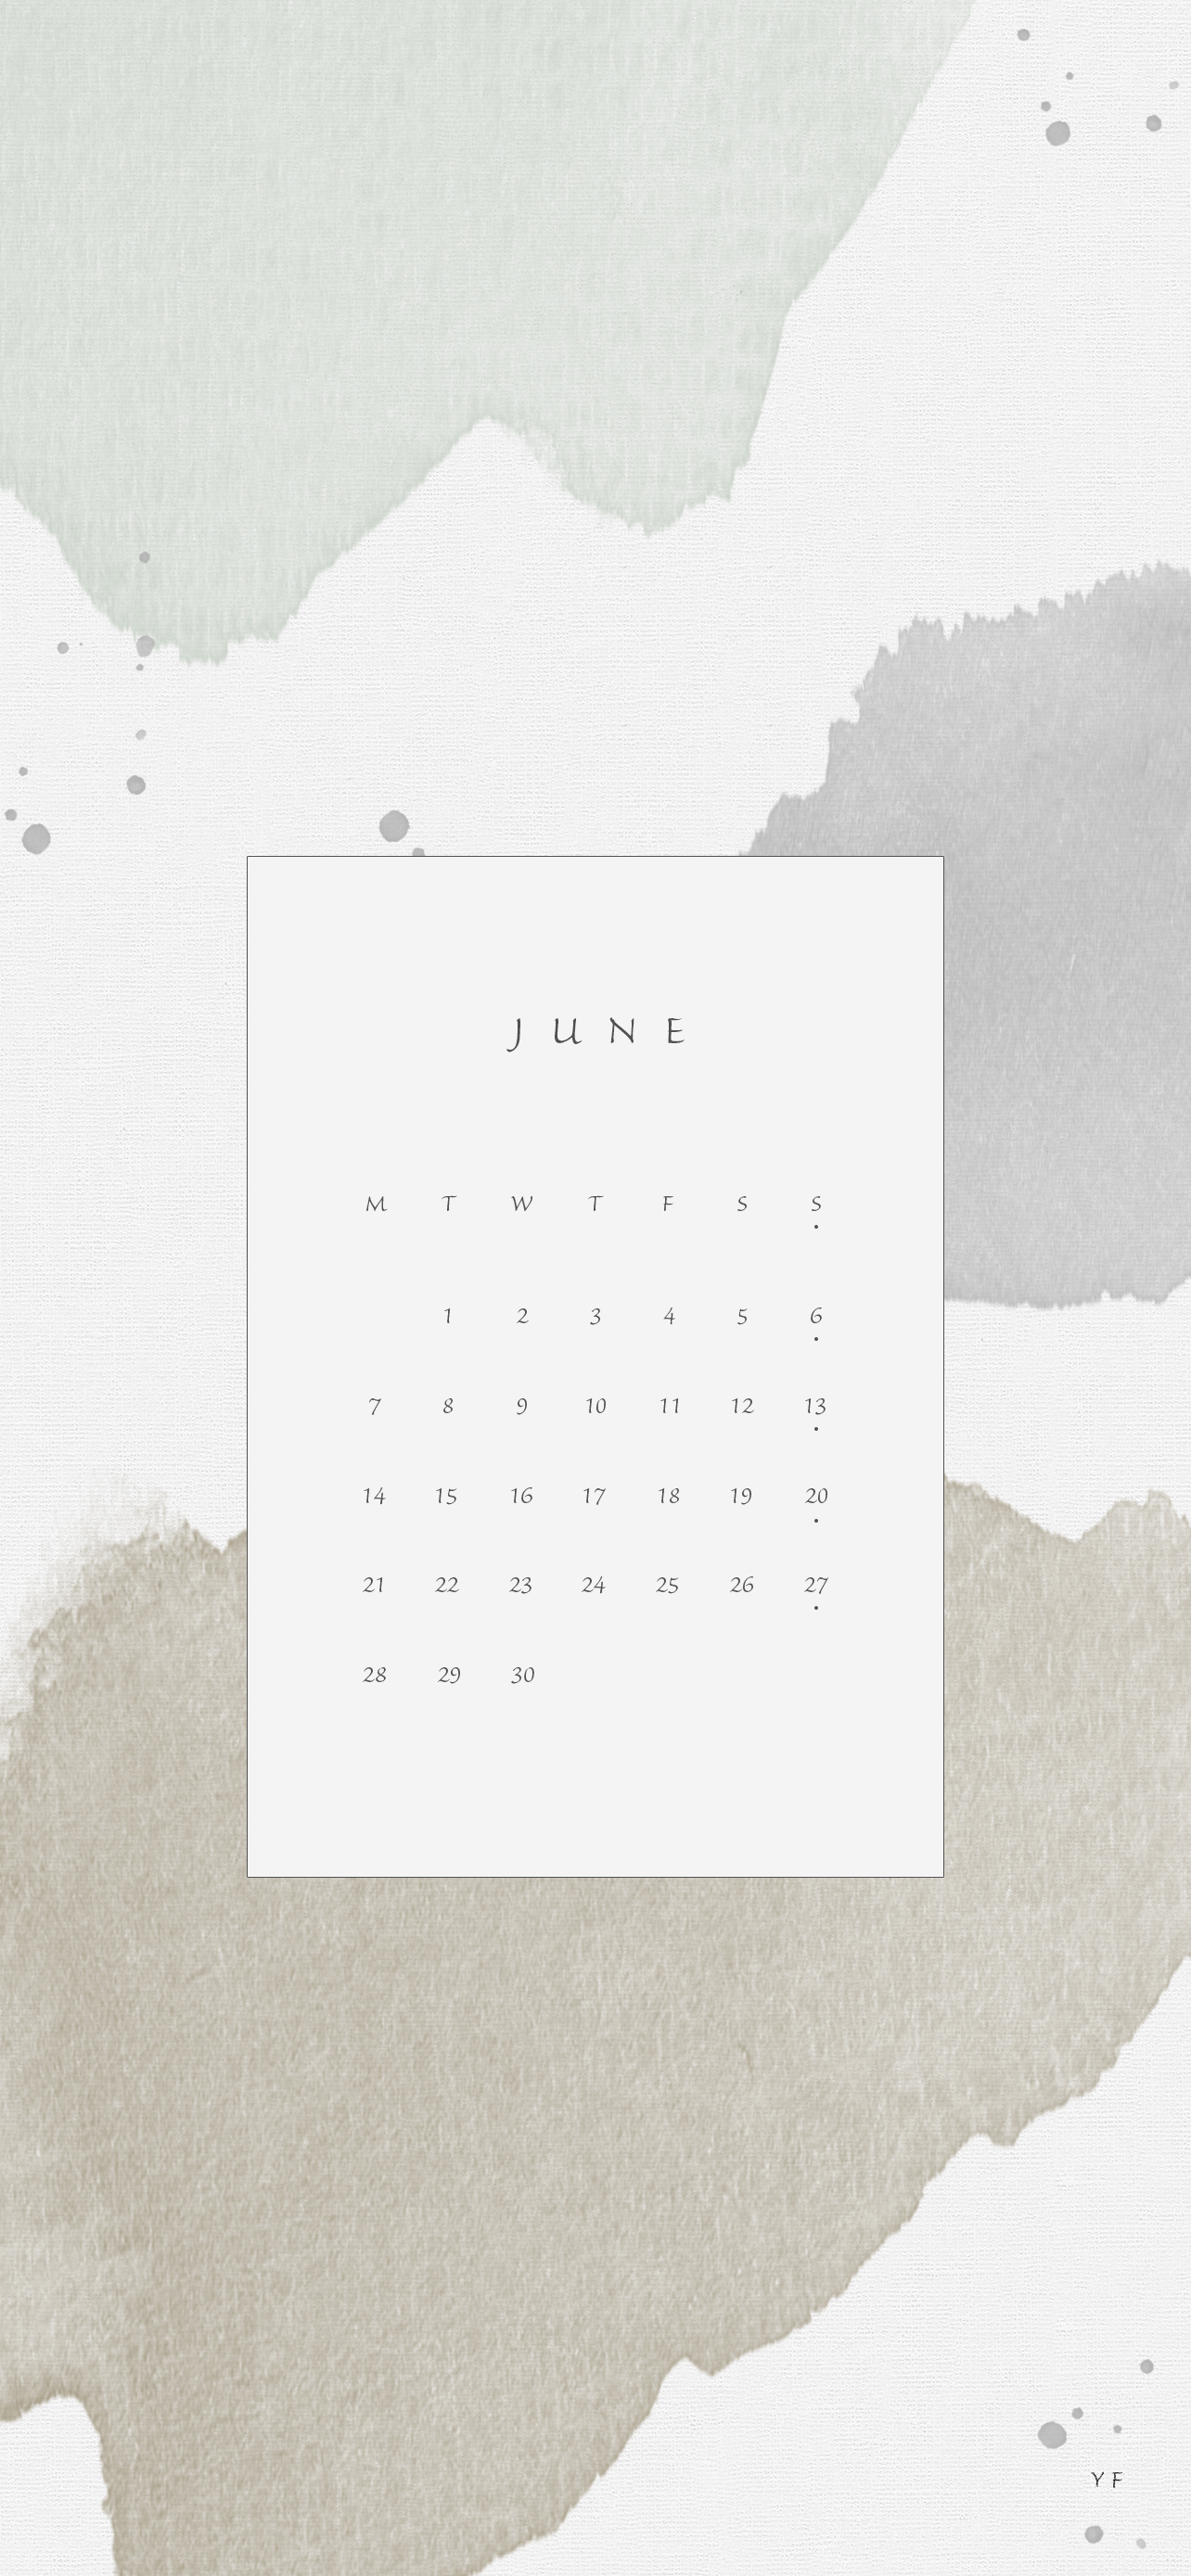 June 21 Calendar Wallpaper For The Iphone Design By Yf